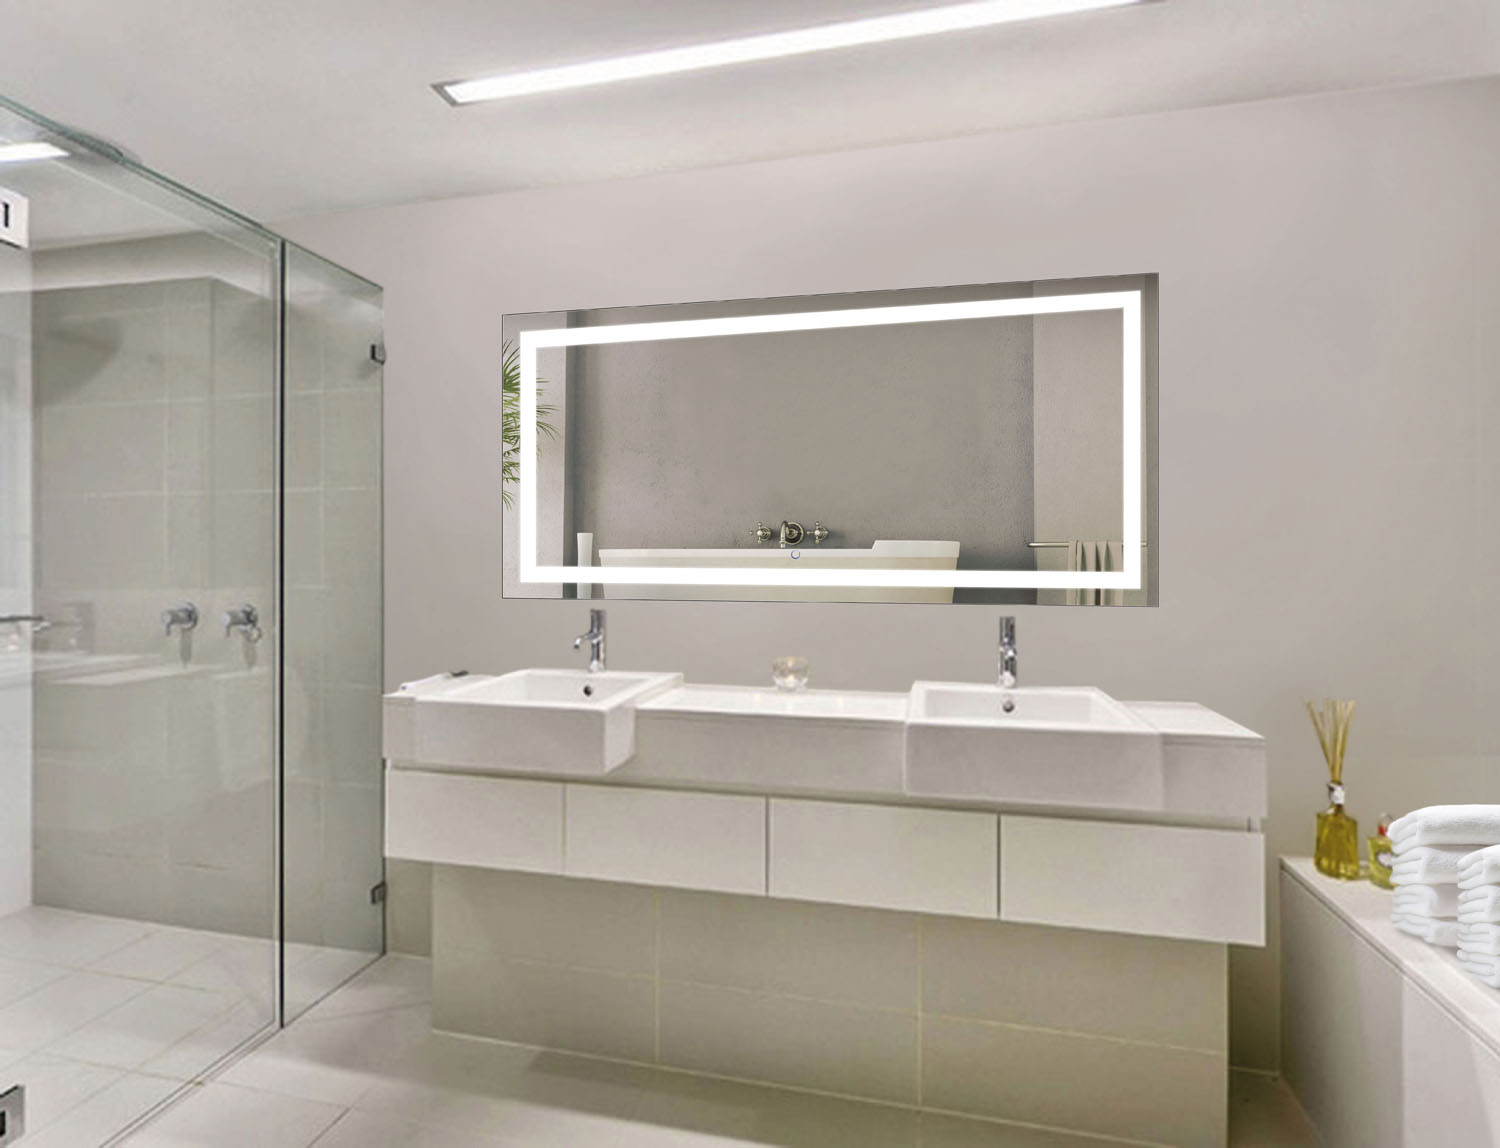 Led Mirror For Bathroom Vanity